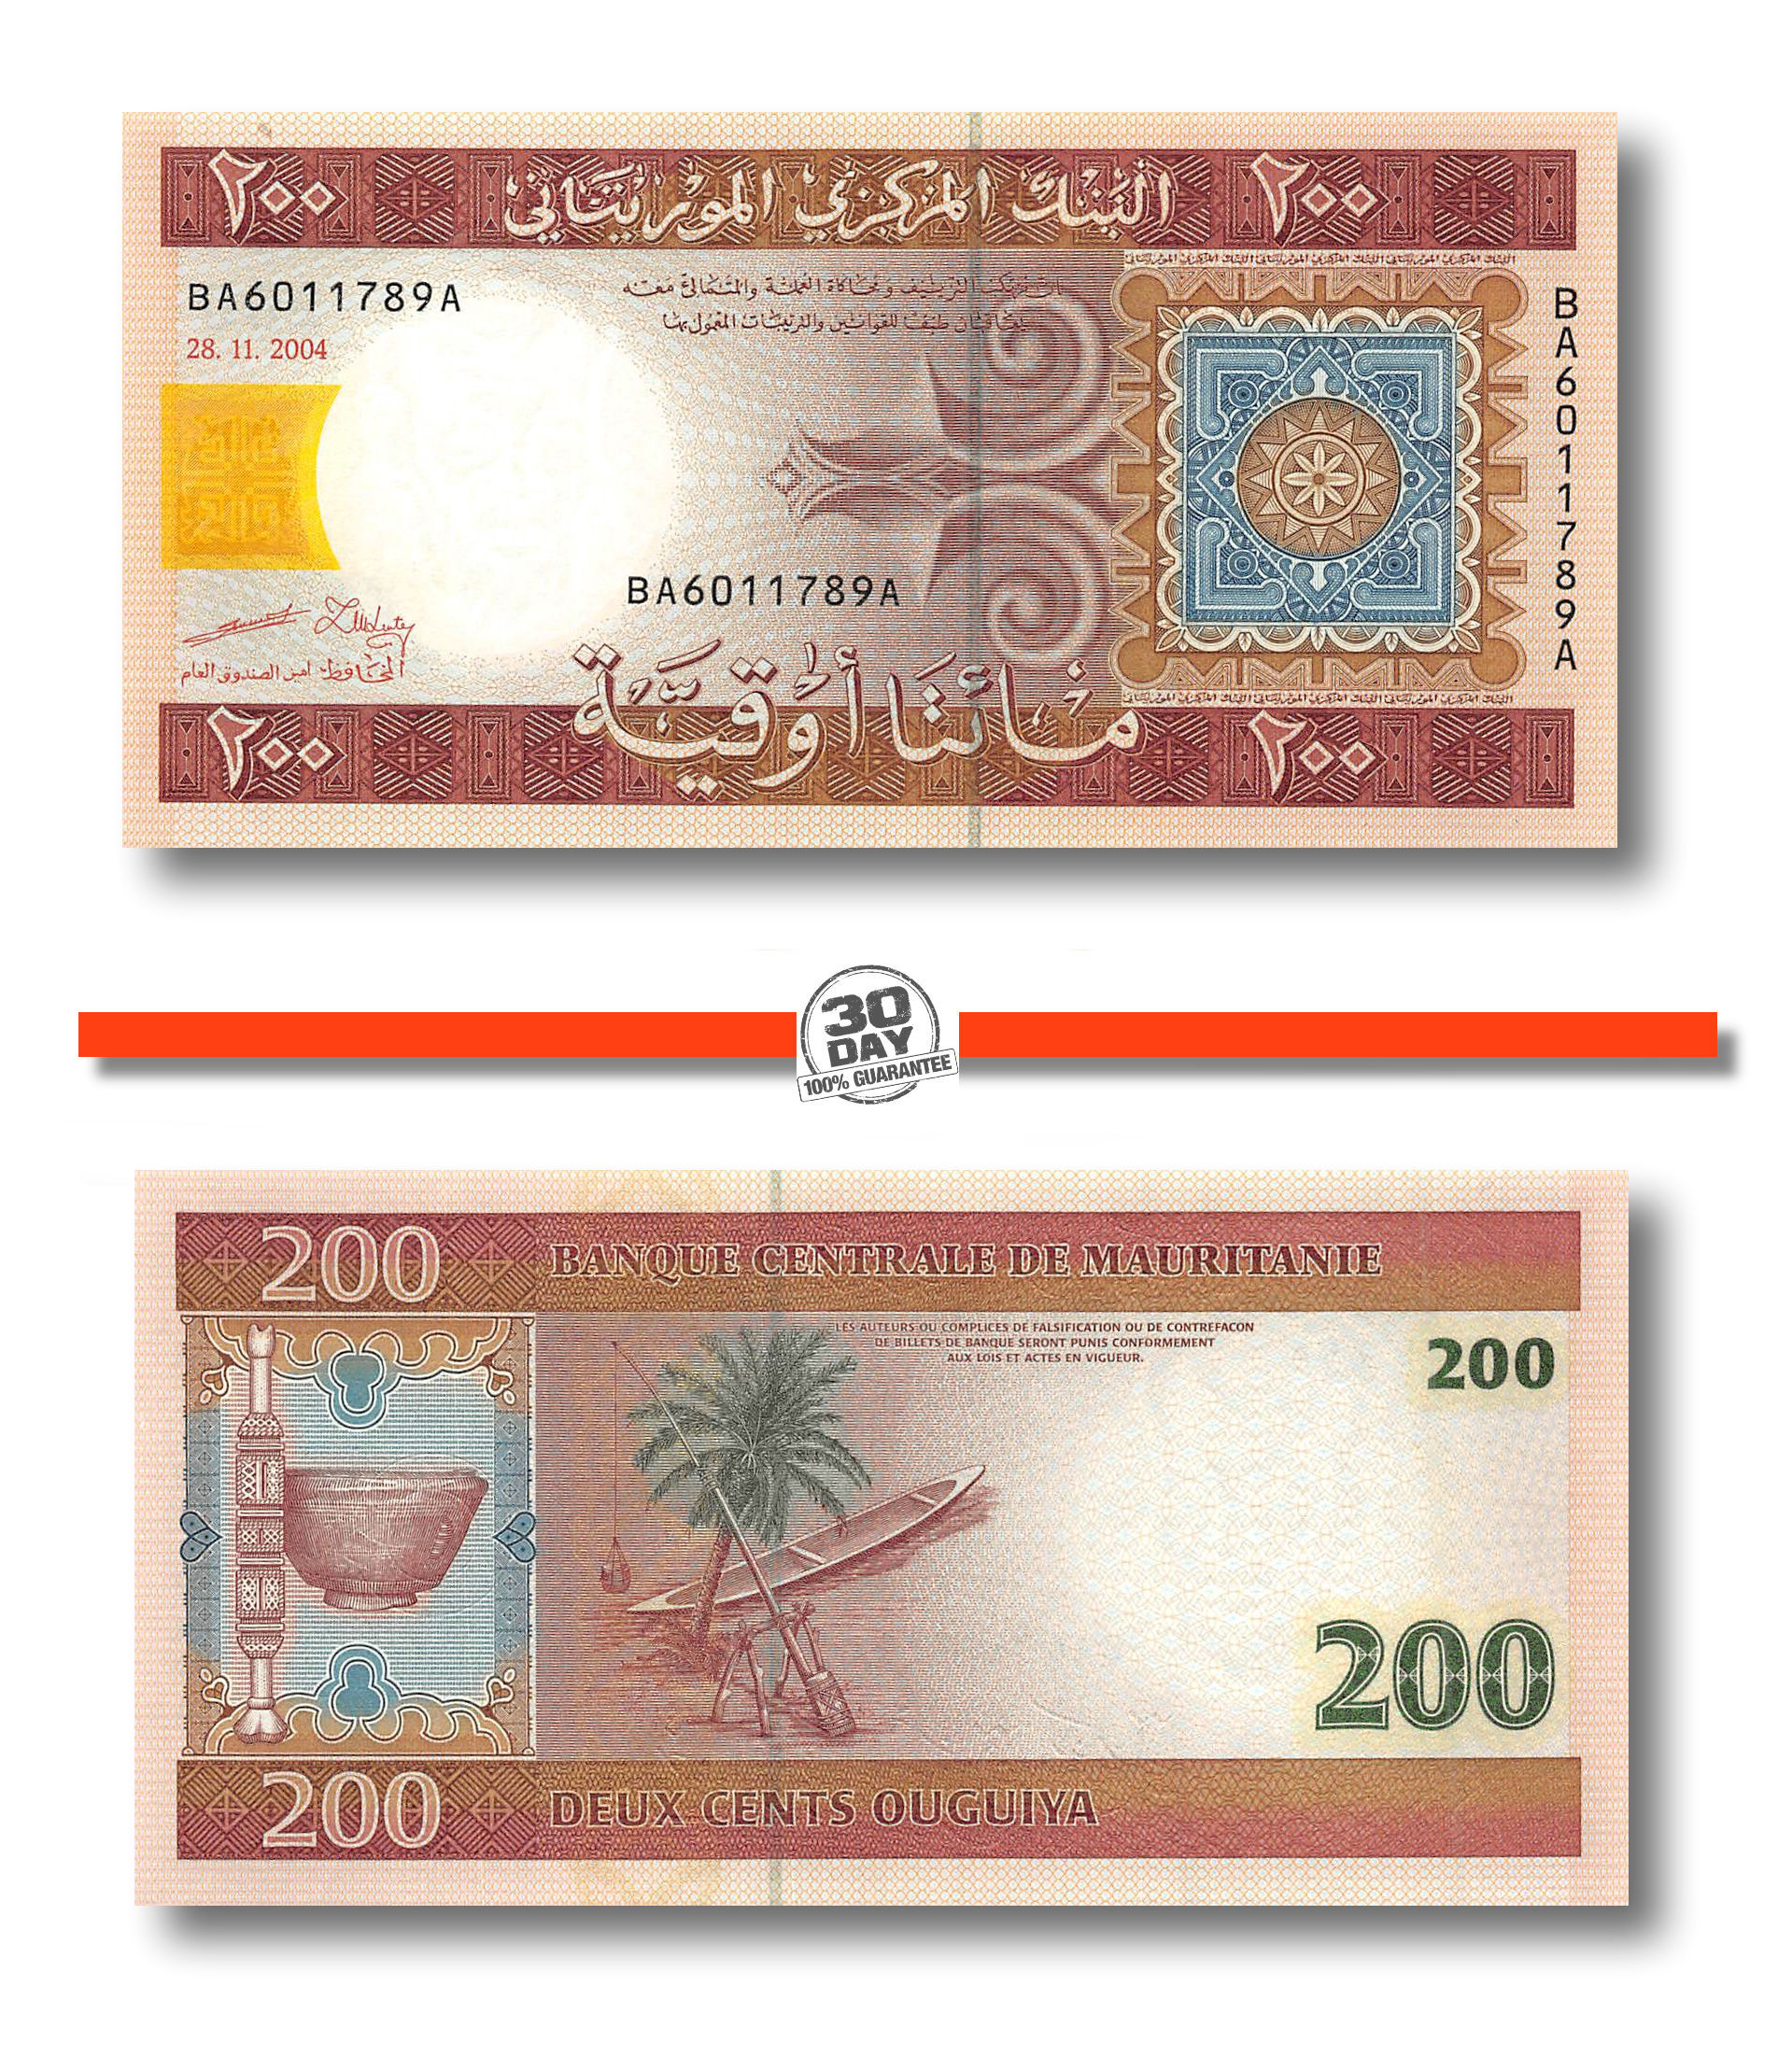 Mauritania 200 Ouguiya 2004 Pick 11 UNC banknote Uncirculated 